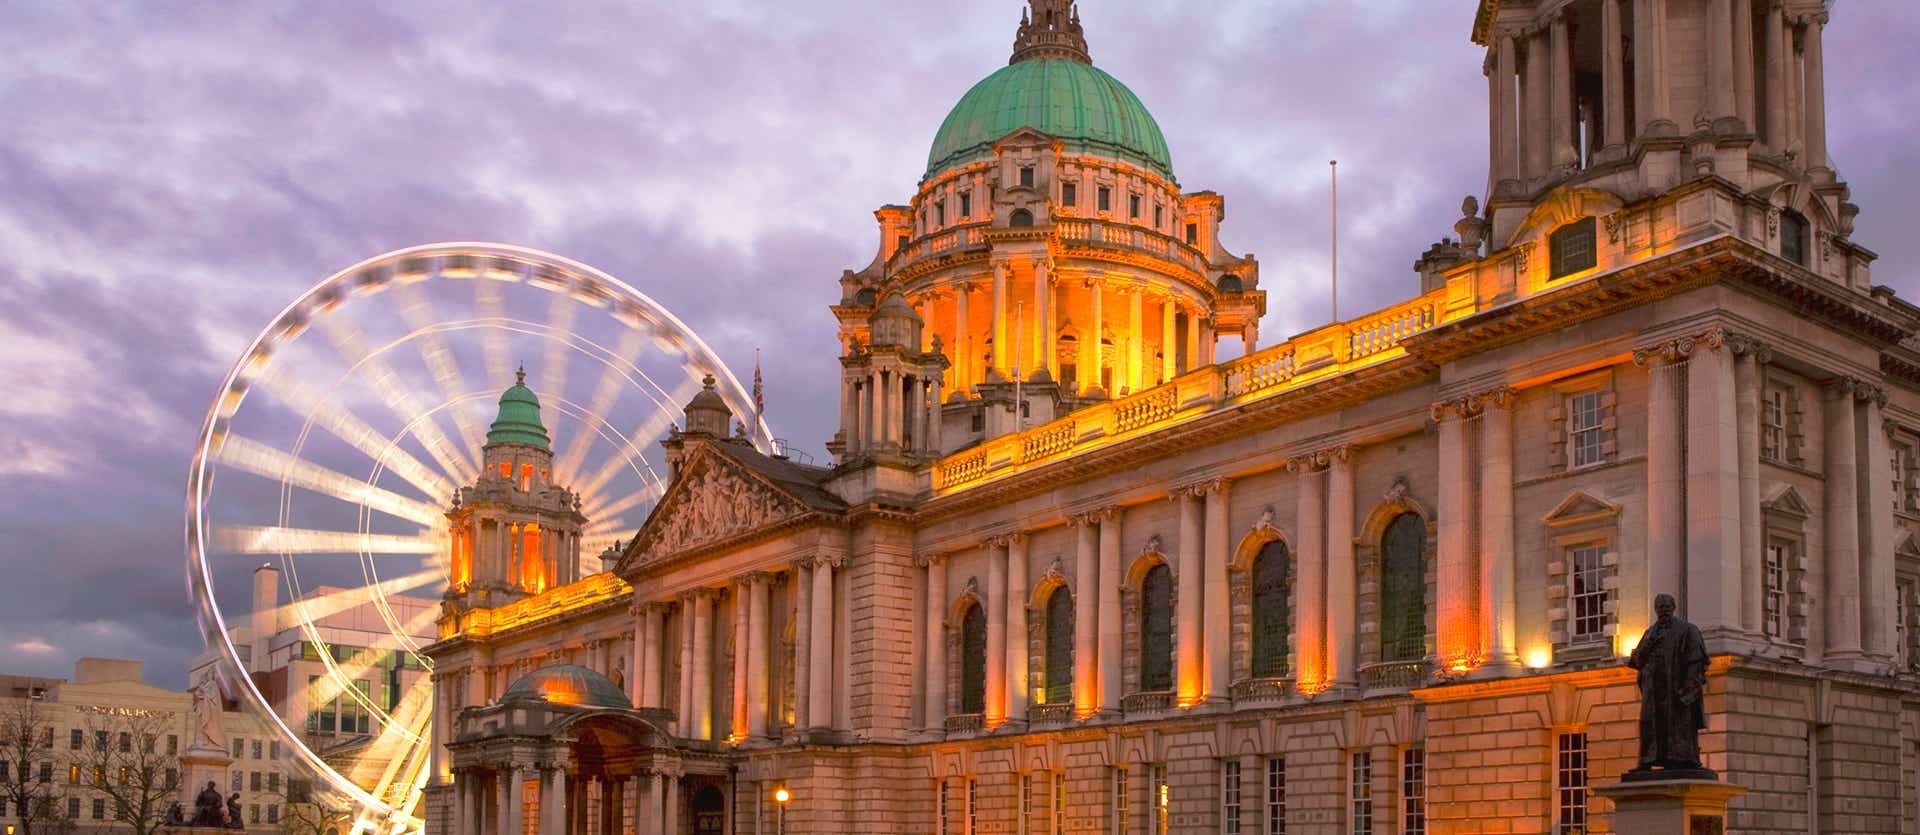 City Hall <span class="iconos separador"></span> Belfast